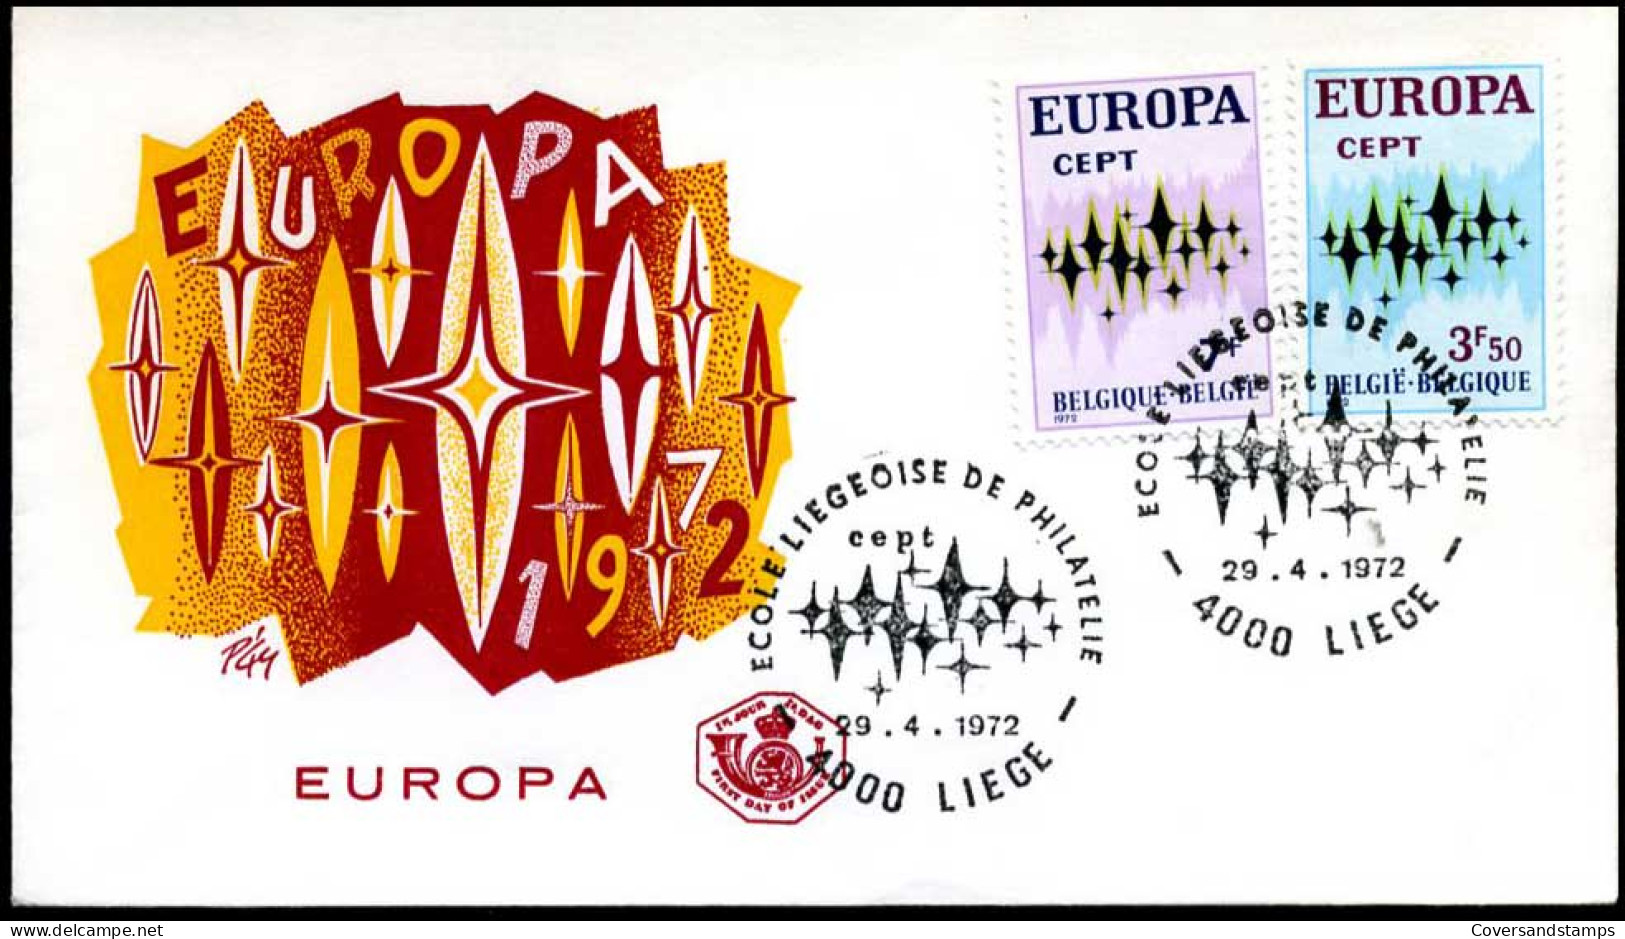  België/Belgique   - FDC - Europa CEPT 1972 - 1972